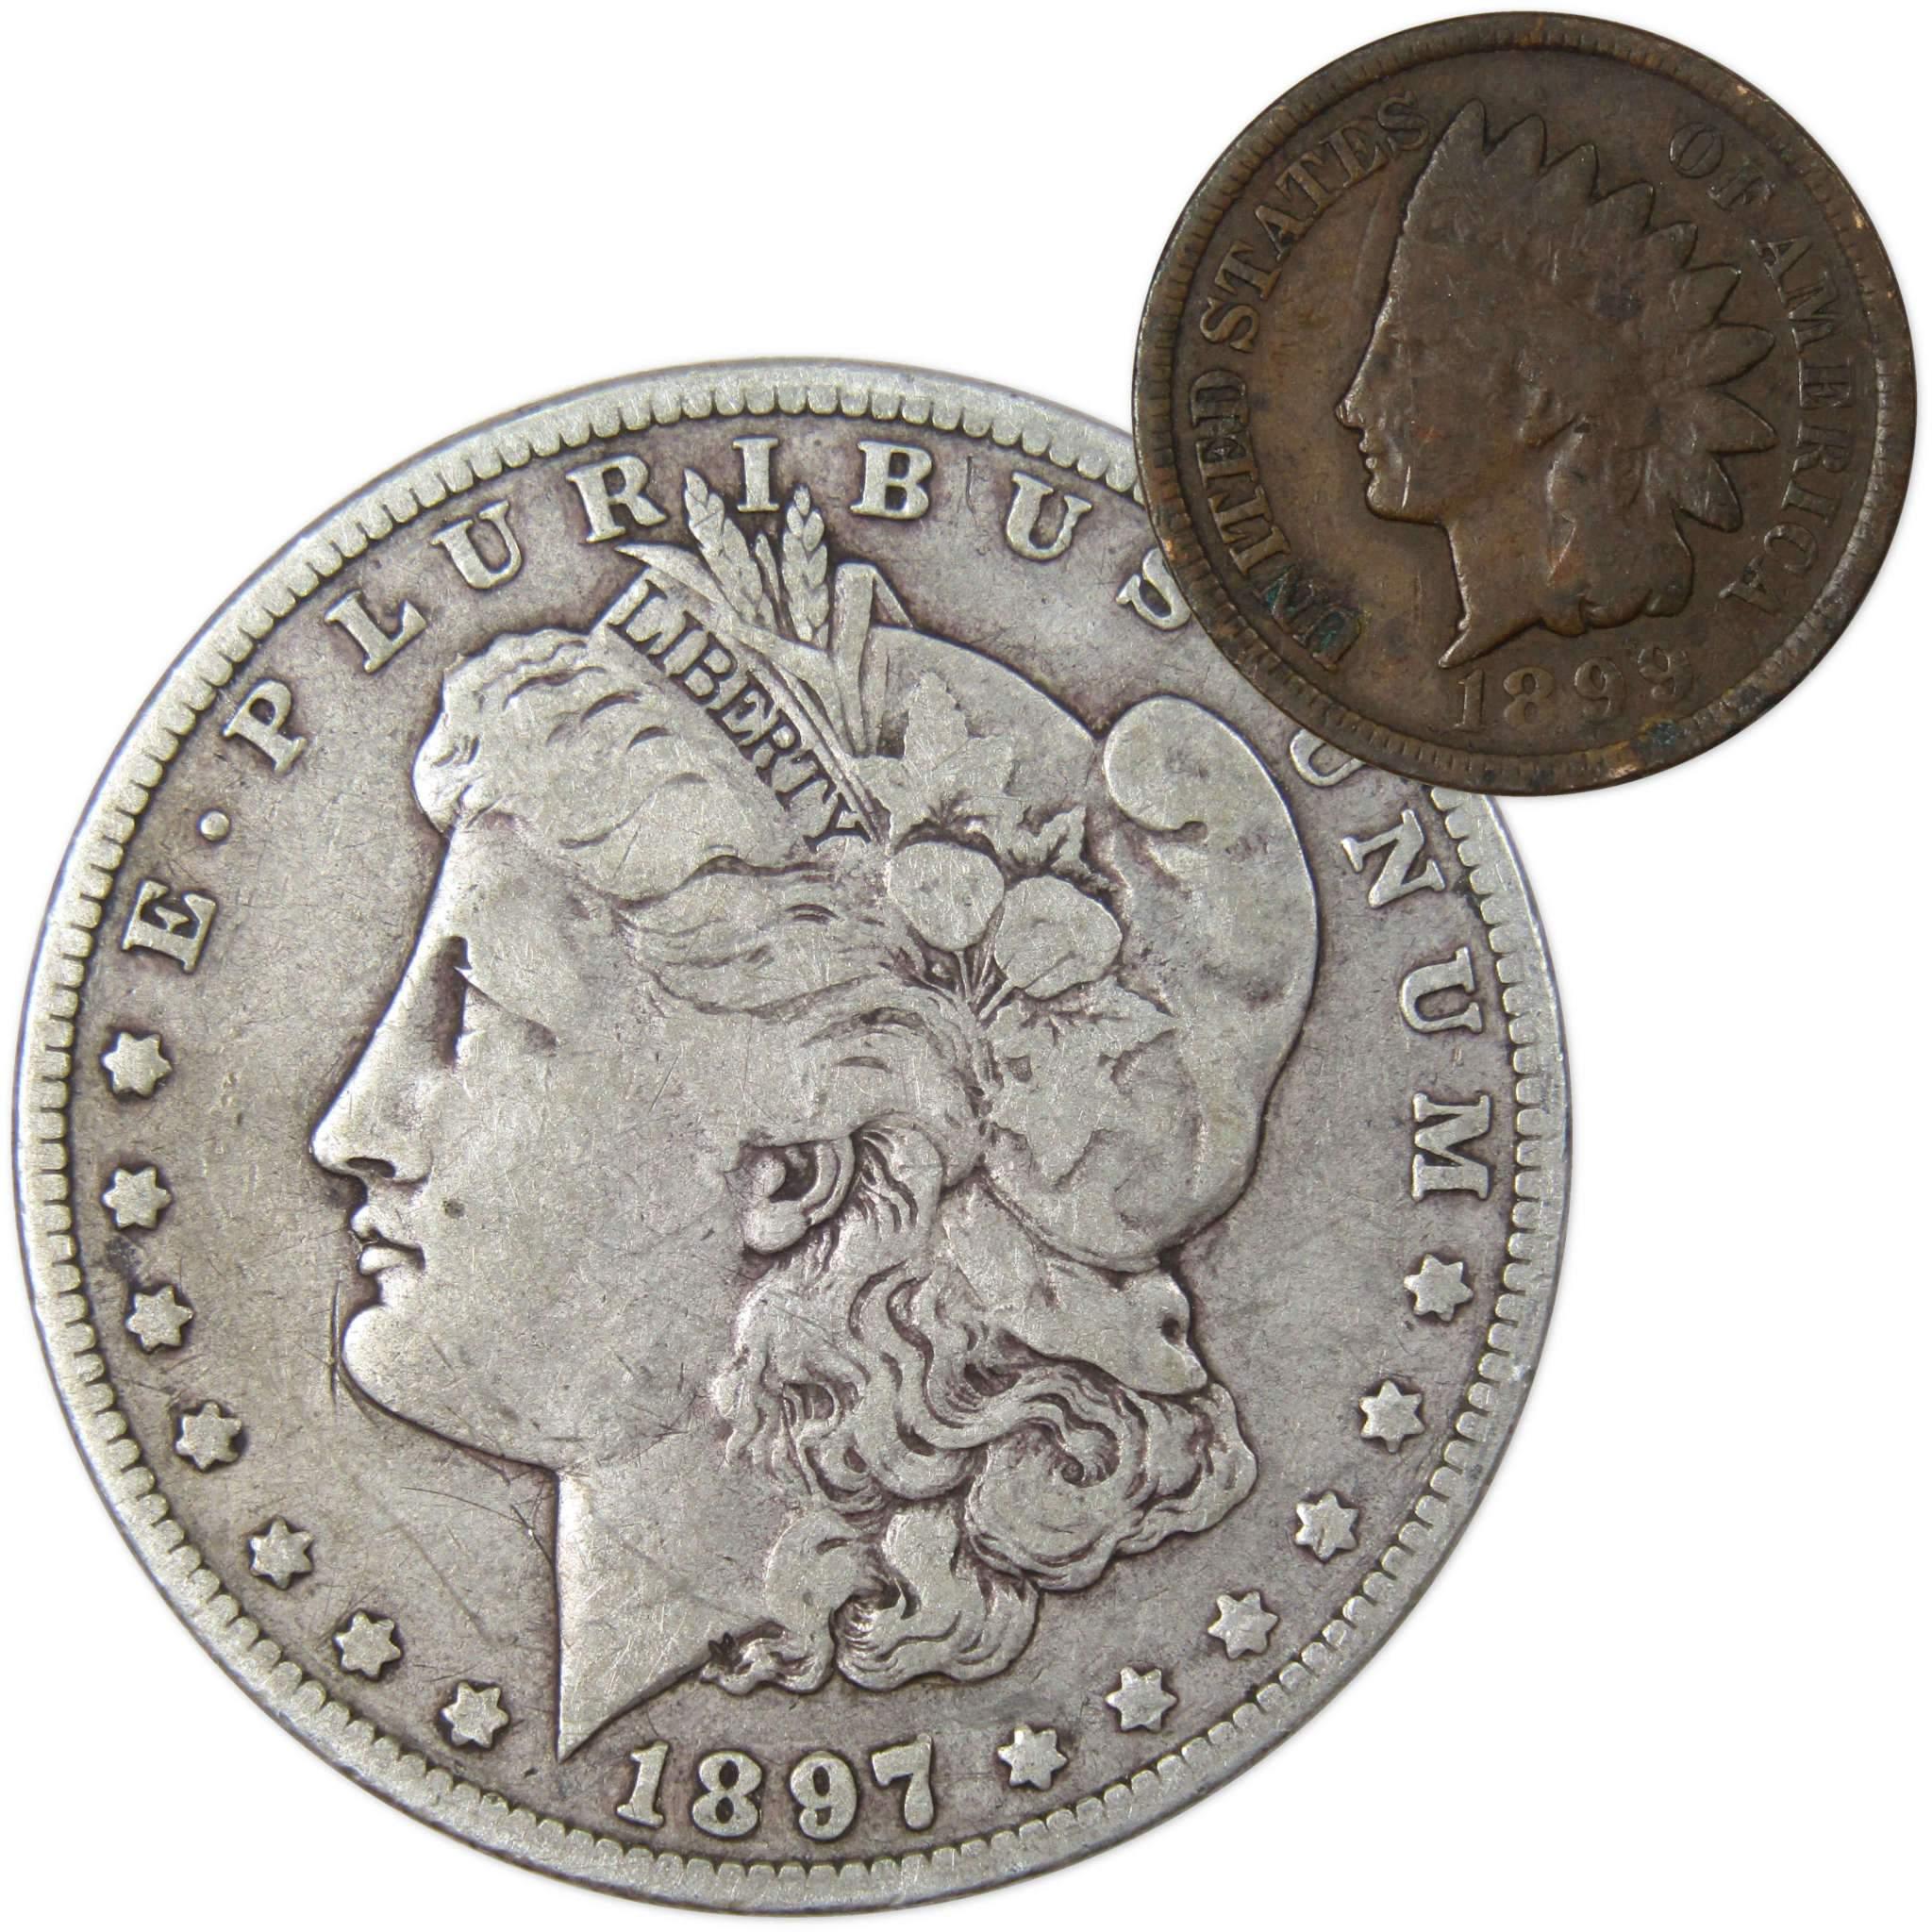 1897 O Morgan Dollar F Fine 90% Silver Coin with 1899 Indian Head Cent G Good - Morgan coin - Morgan silver dollar - Morgan silver dollar for sale - Profile Coins &amp; Collectibles